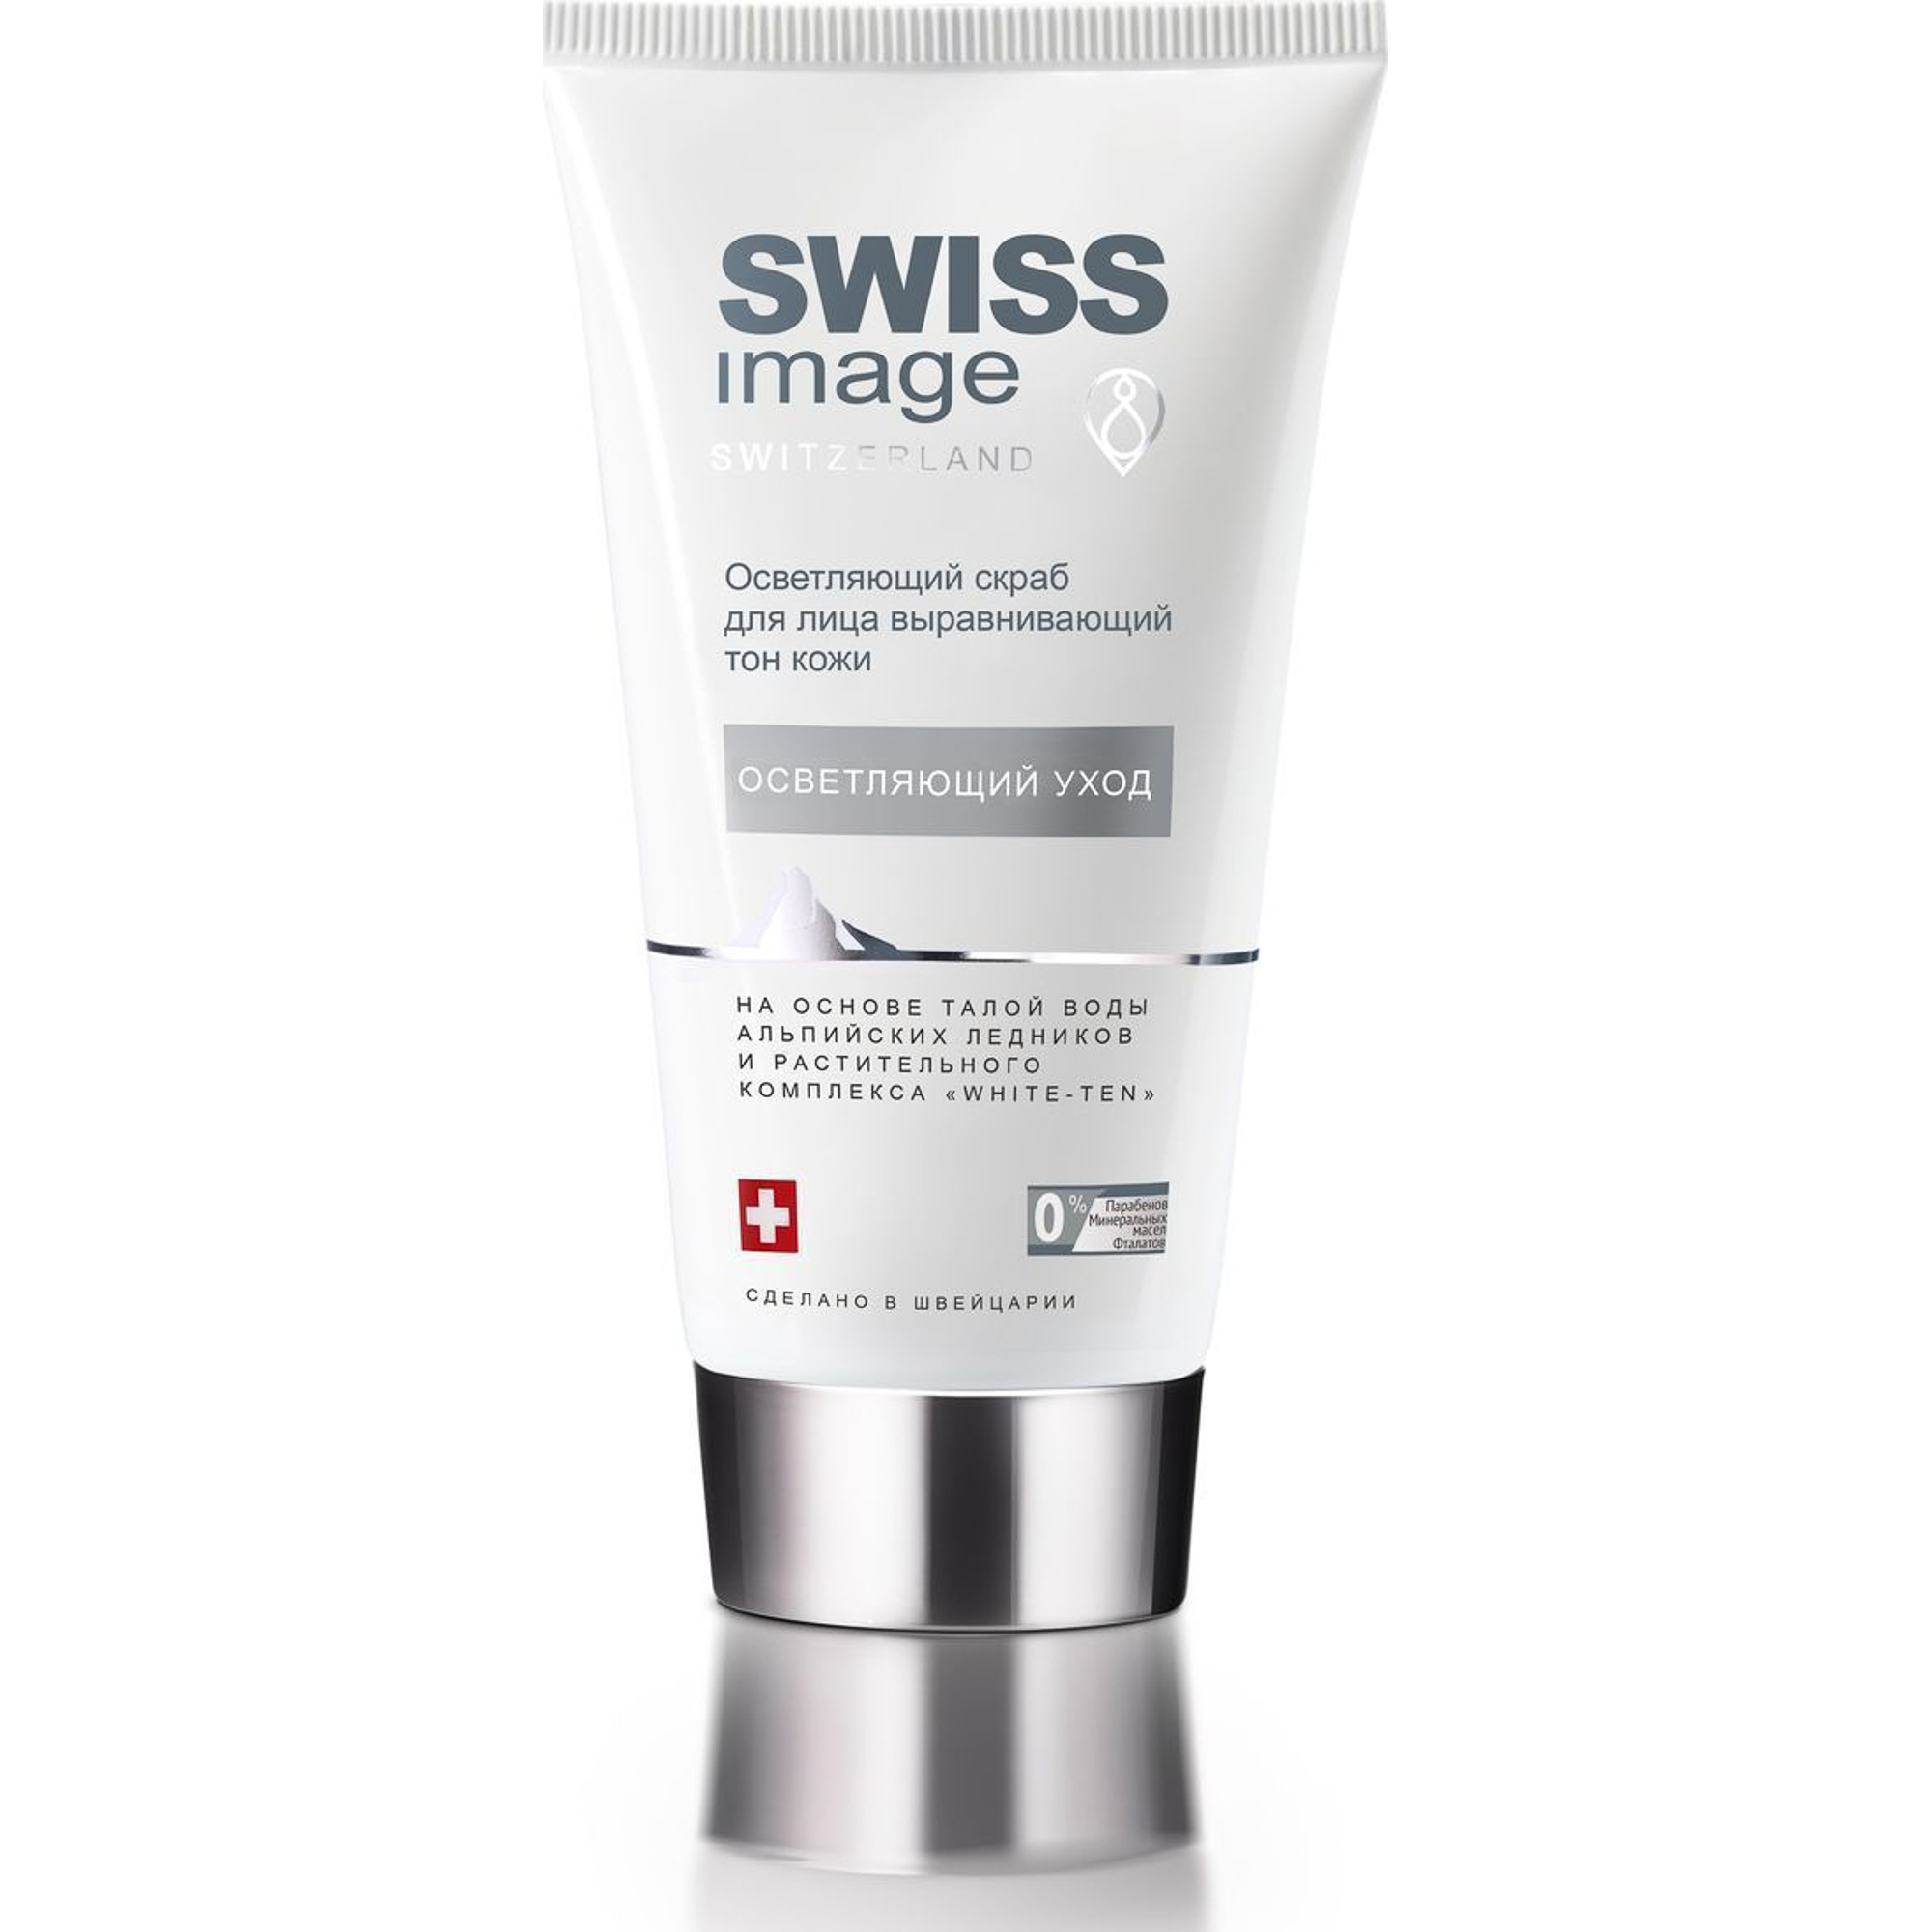 Скраб Swiss image осветляющий для лица 150 мл 38098 - фото 1